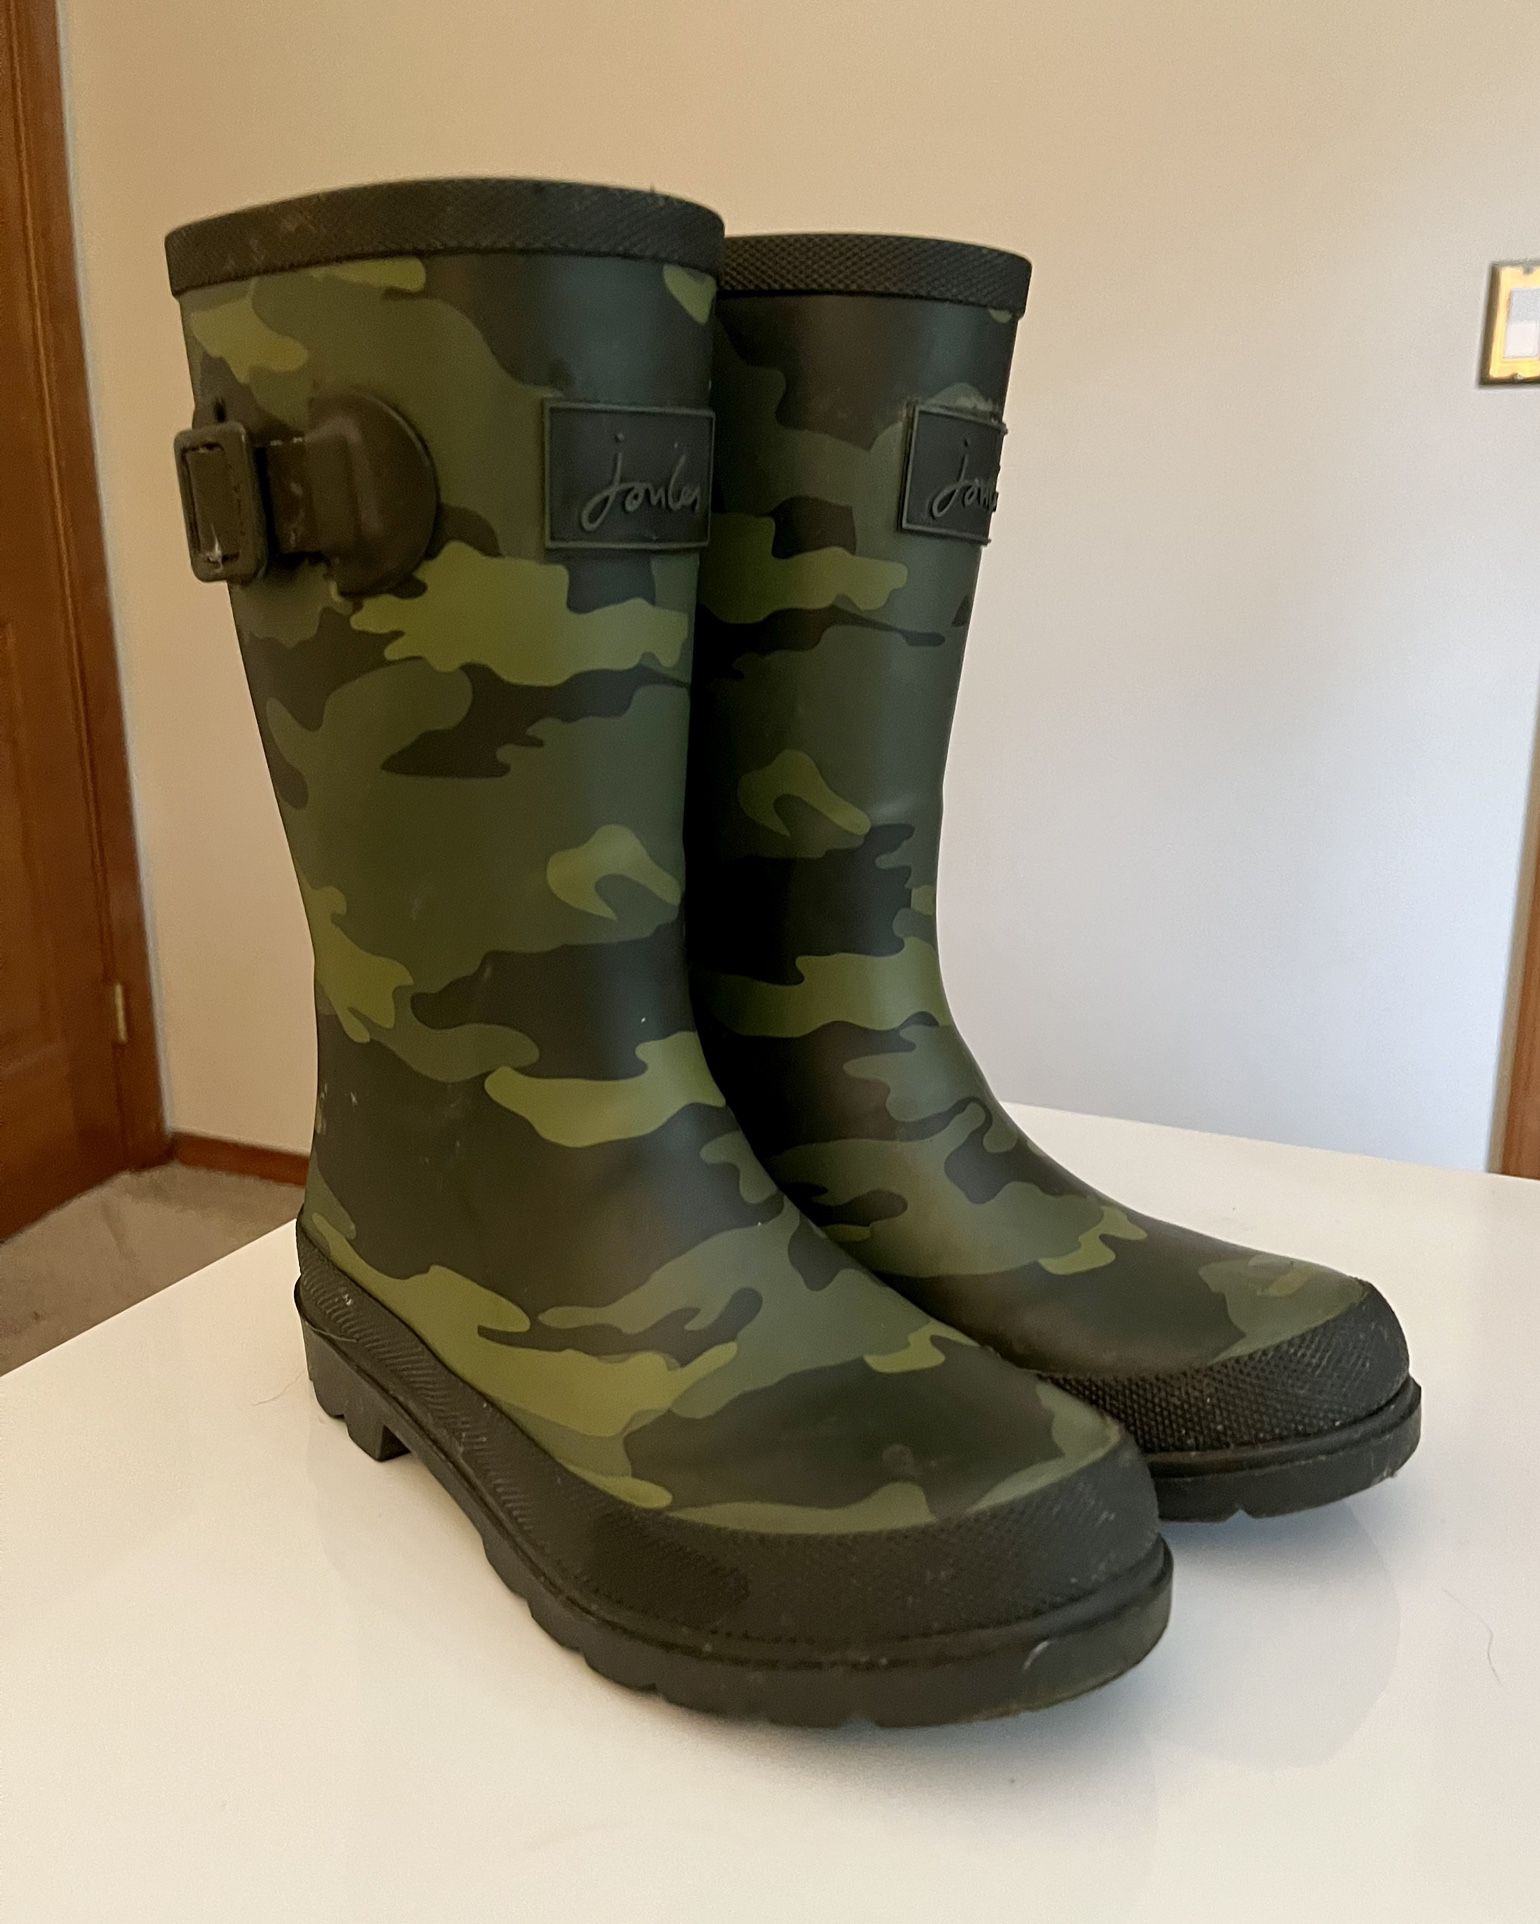 Joules Kids Green Camo Rain boots - Size US 3 (Big Kids)